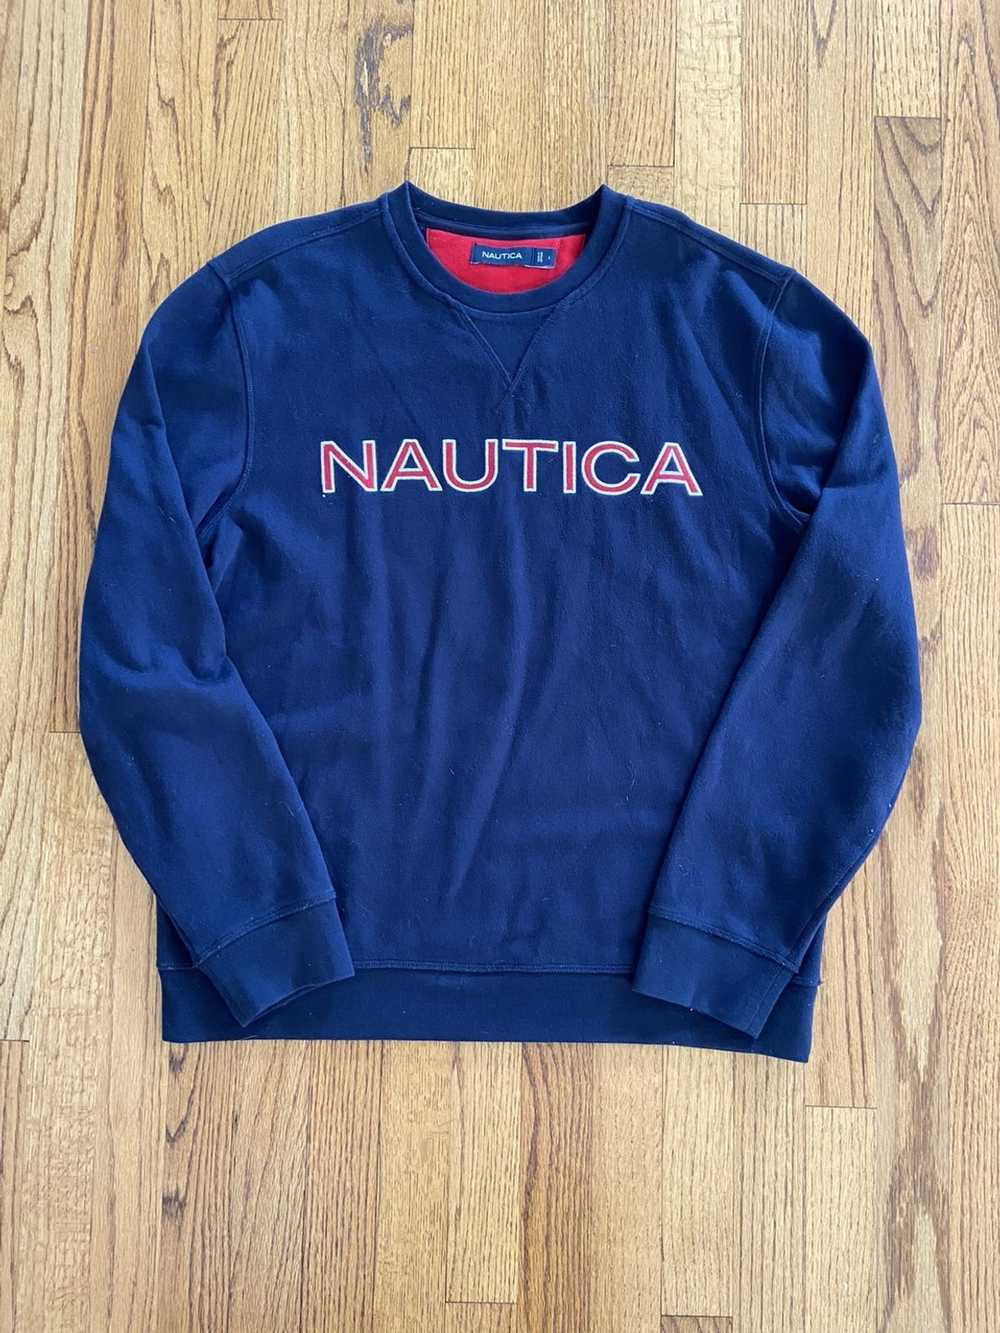 Nautica × Vintage Vintage Nautica Crewneck Sweater - image 1